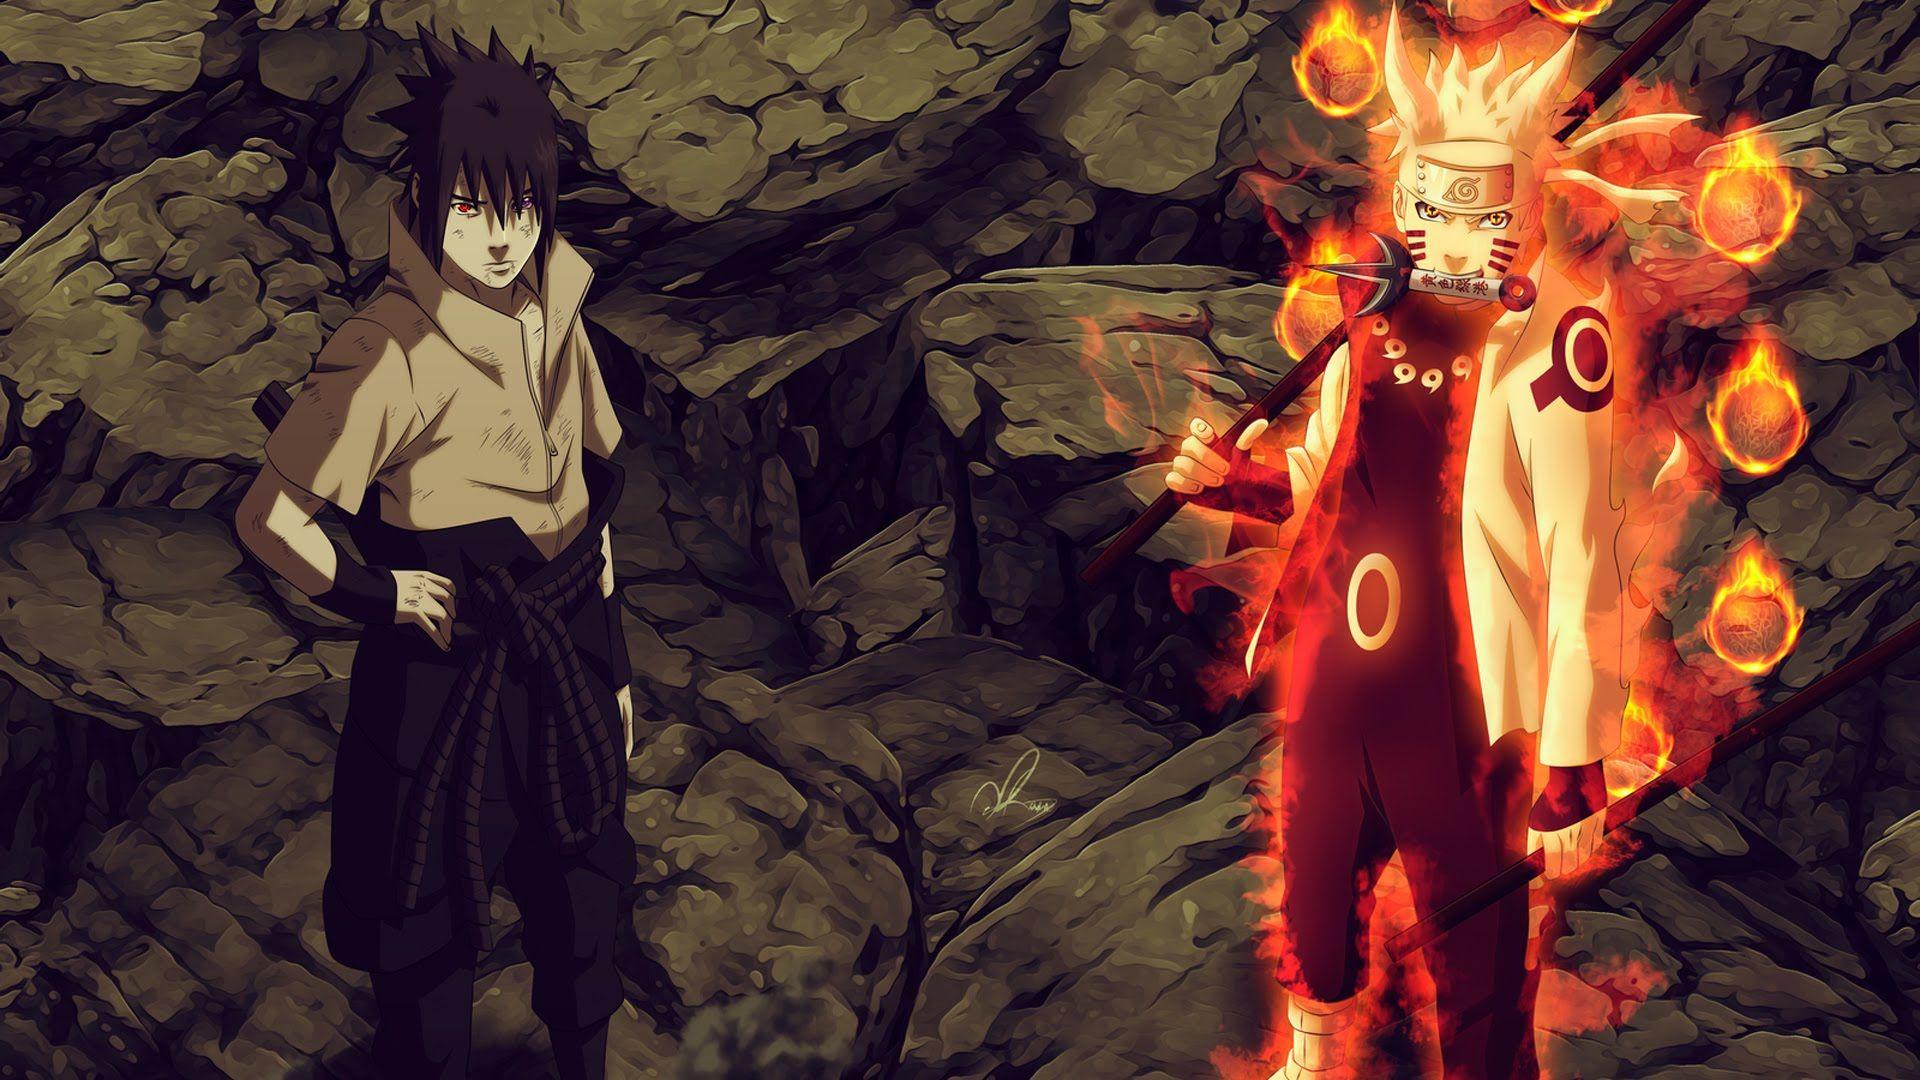 Six Paths Naruto and Rinnegan Sasuke (Revolution) vs Madara